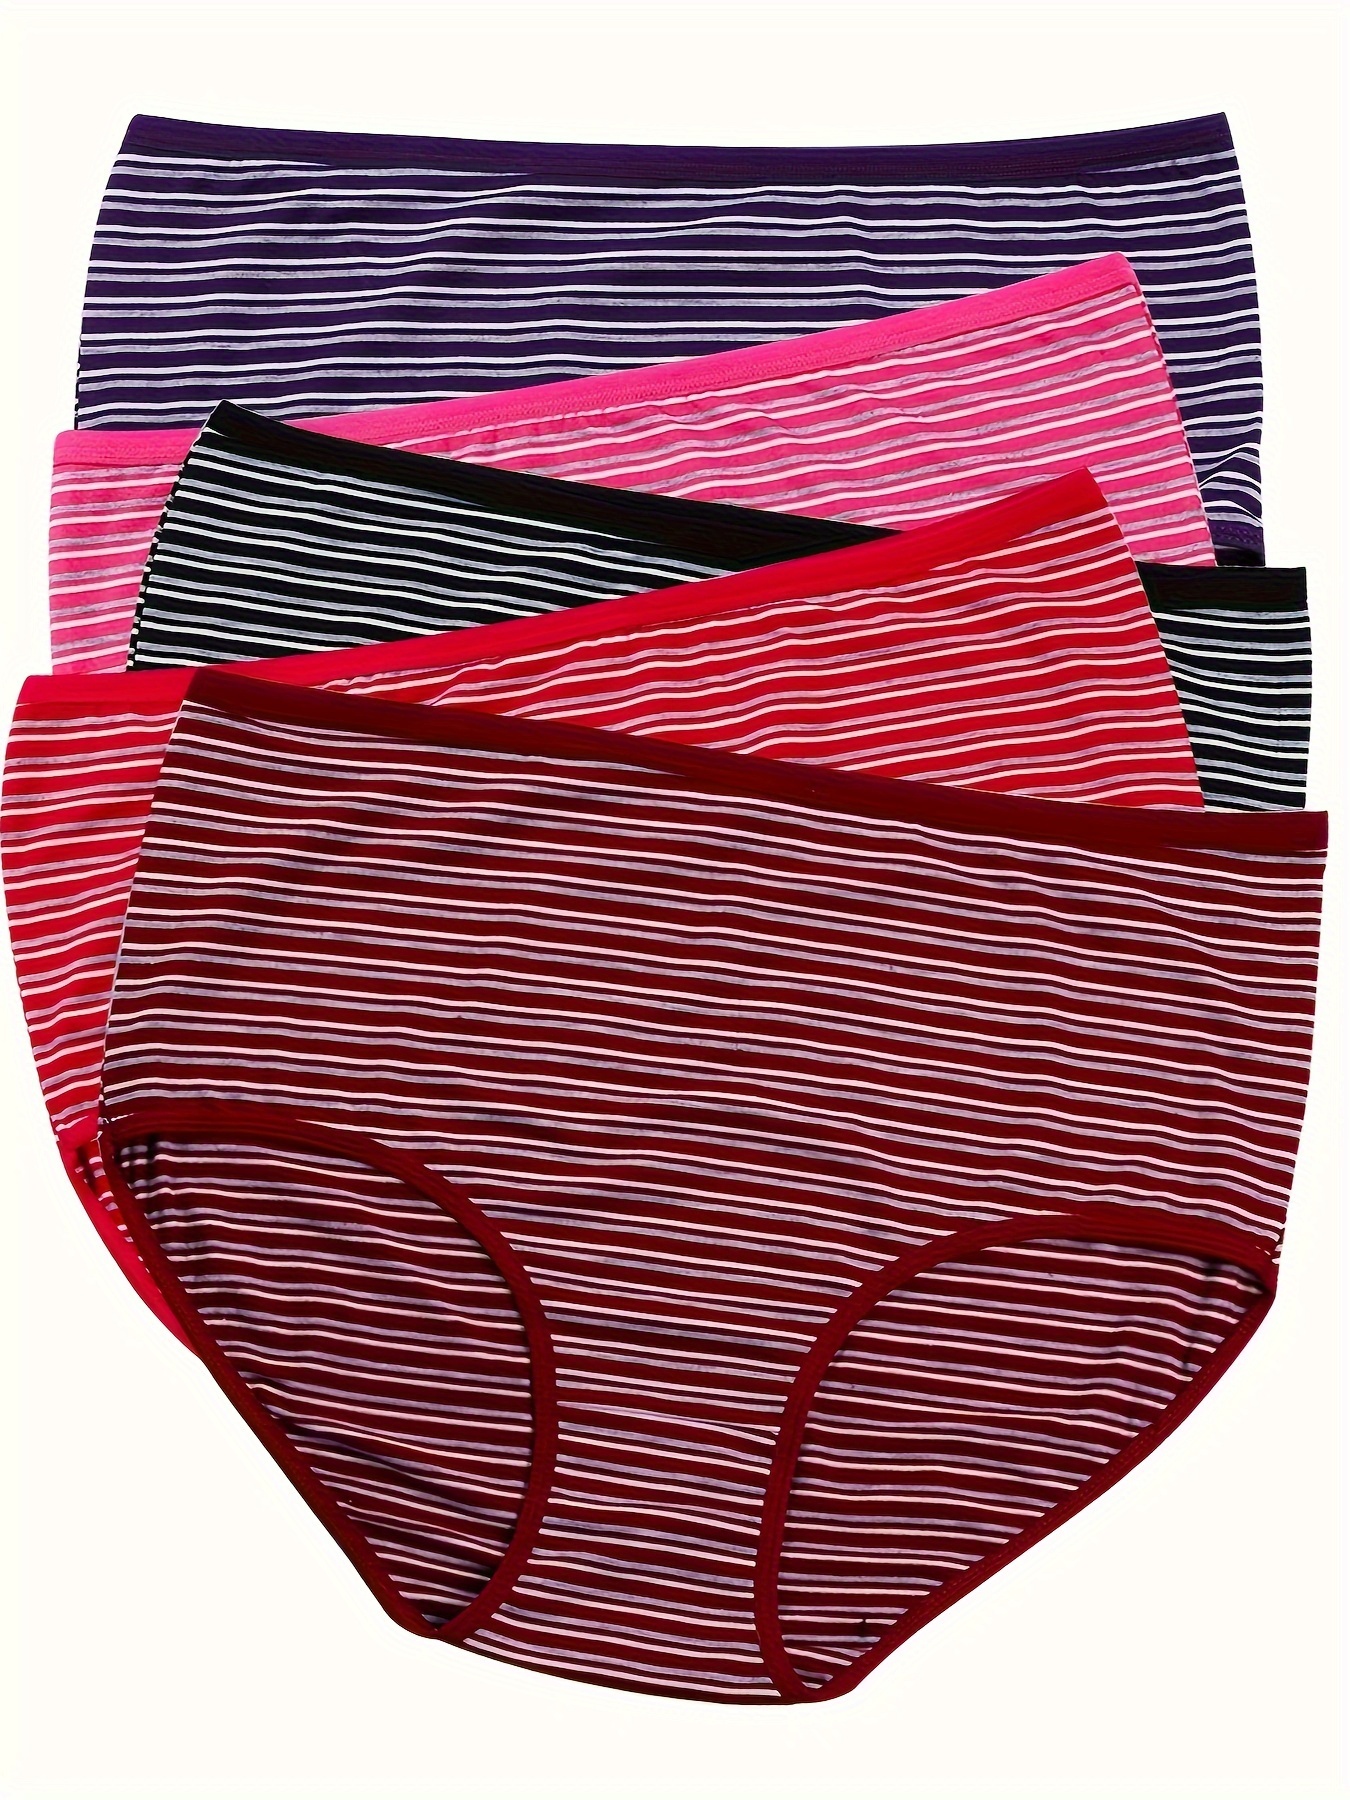 Set of 3 cotton boyshort underwear with elasticized lace waistband -  Leopard's heart - Plus Size. Size: 2x